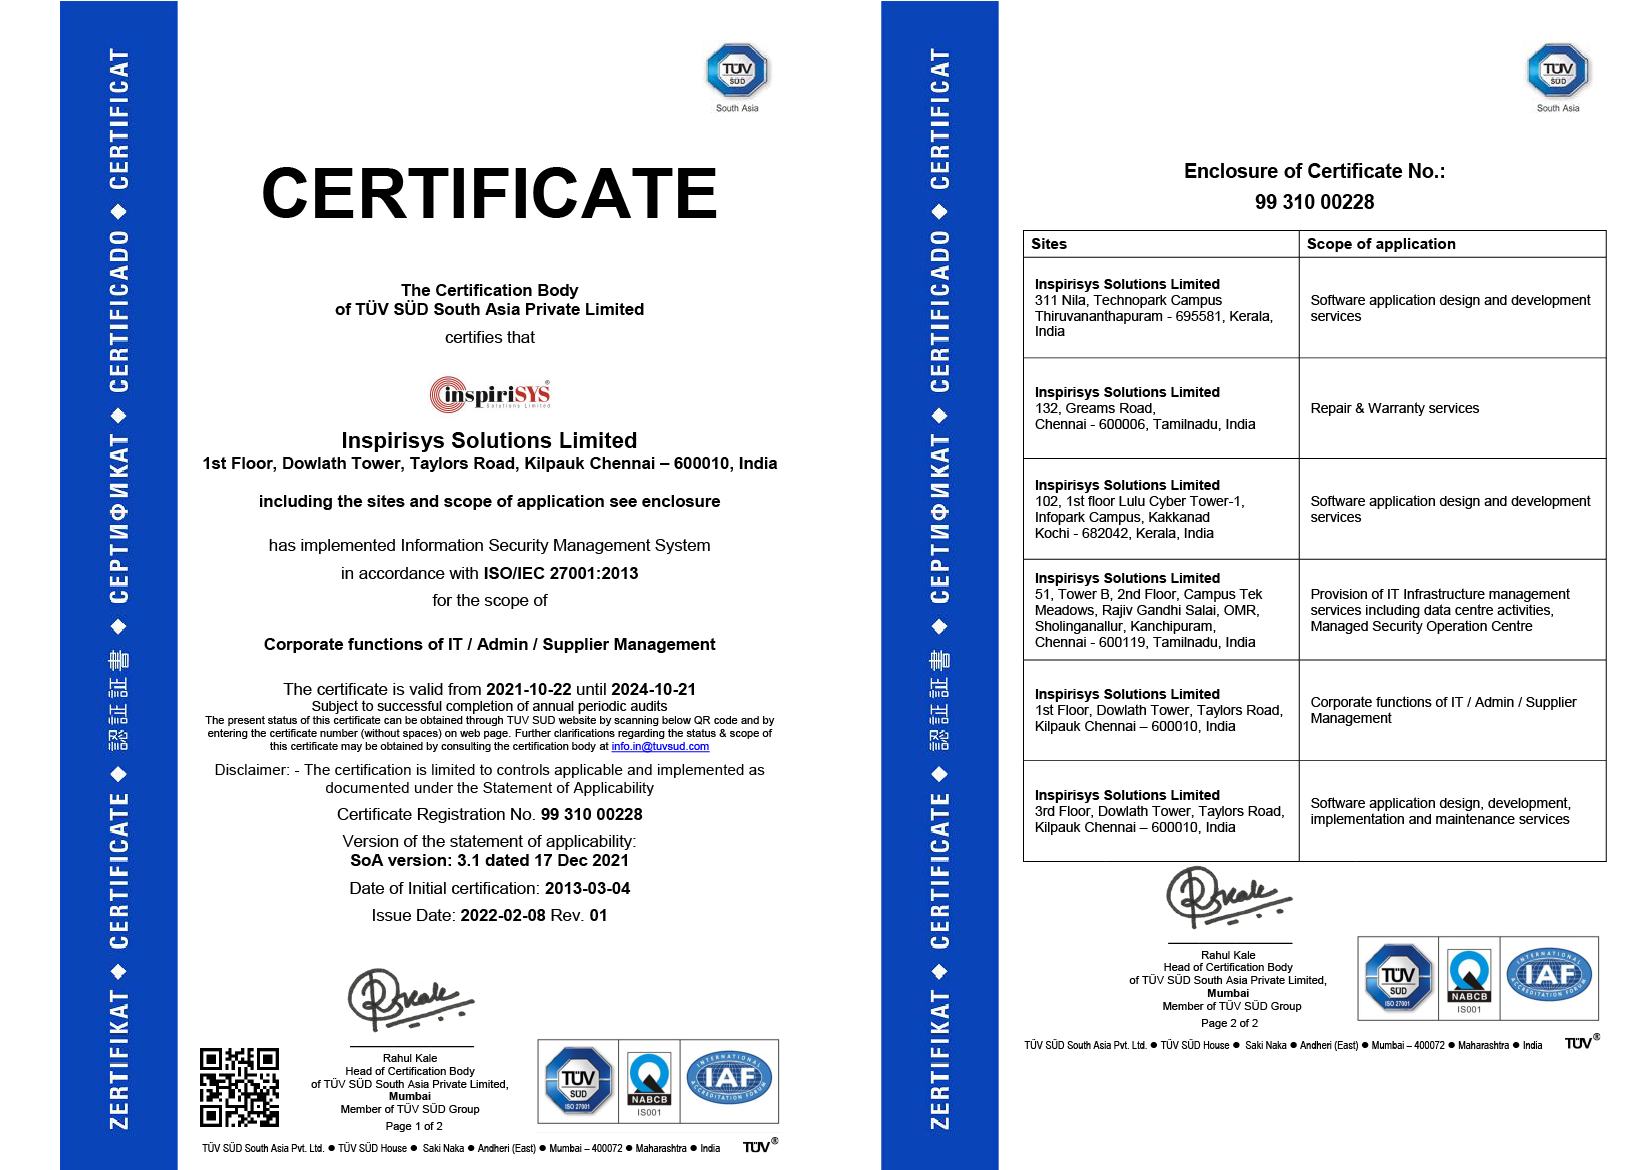 ISO / IEC 27001:2013 certificate